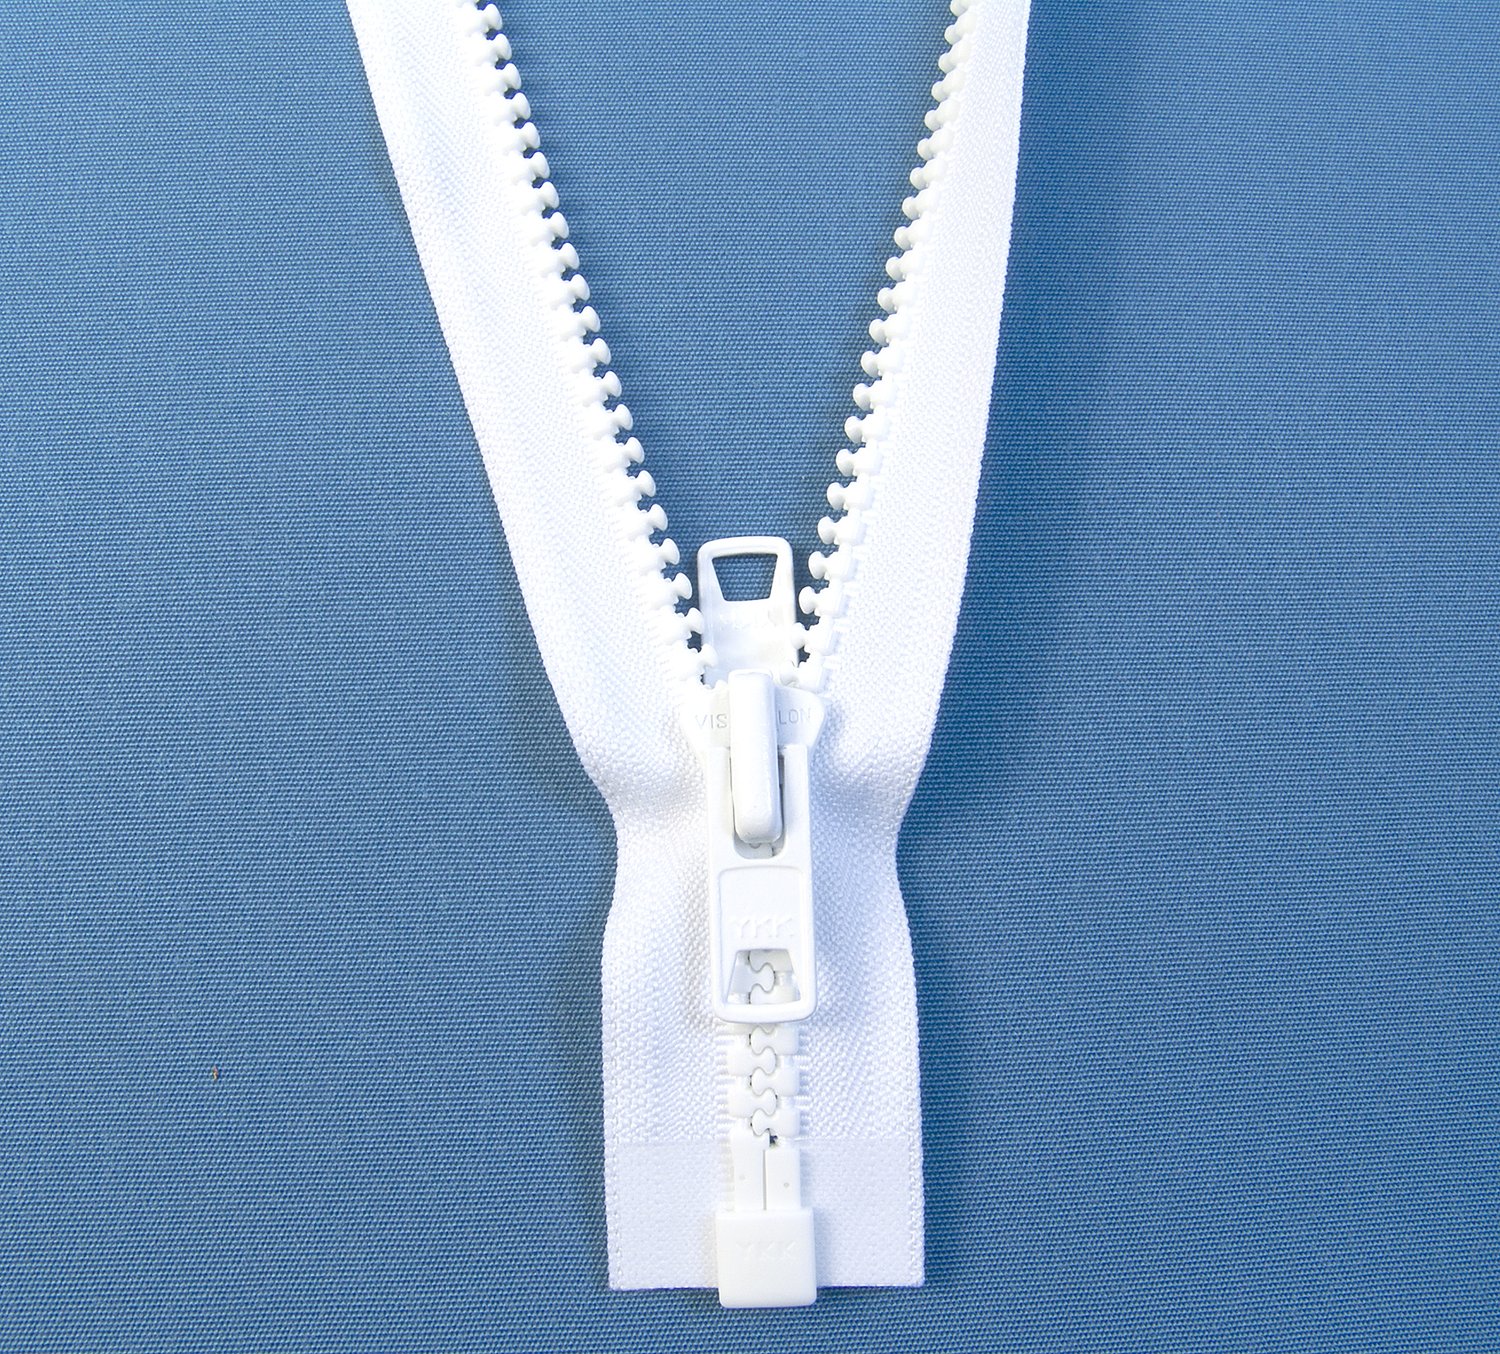 Heavy Duty Zippers #10 - White — Northwest Tarp & Canvas